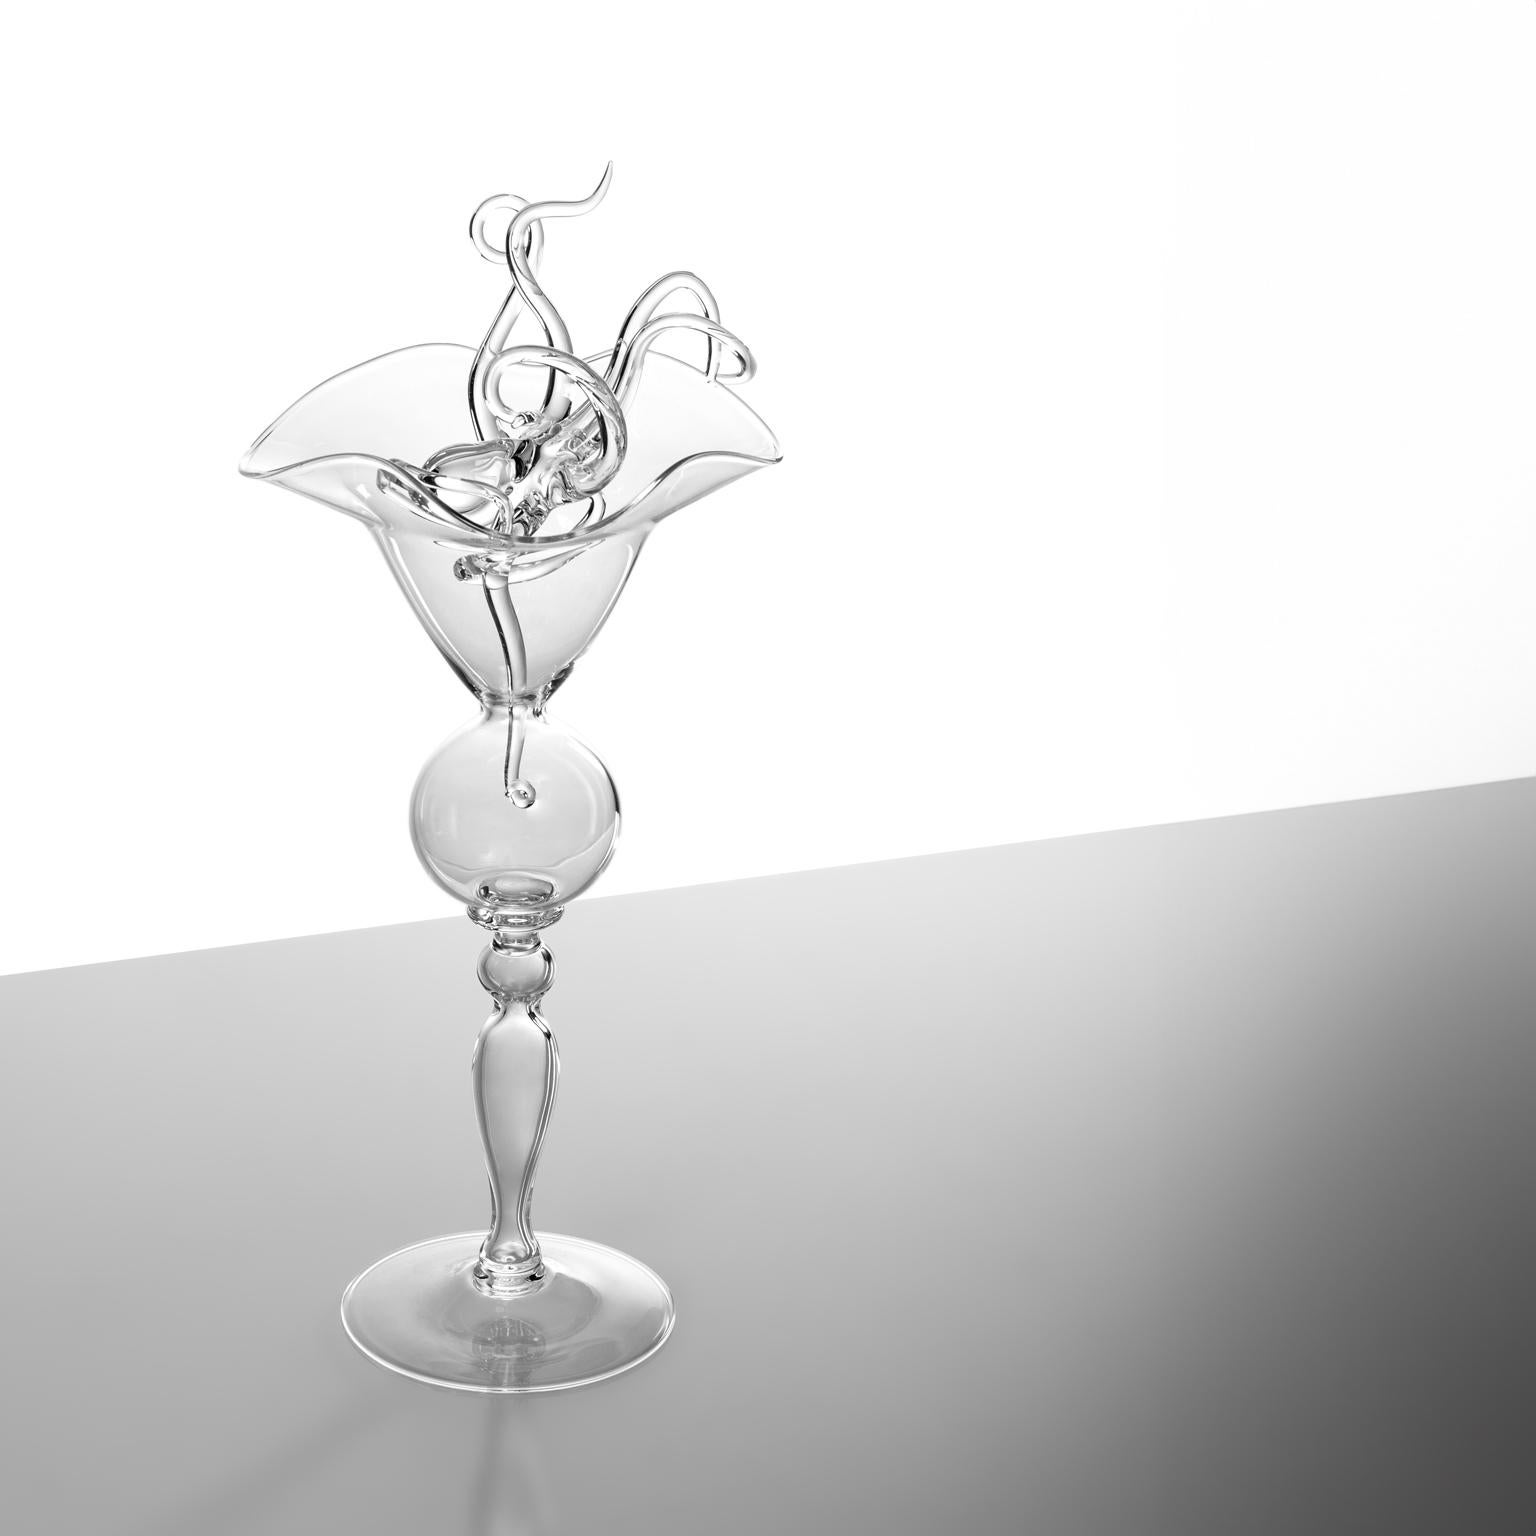 Modern Contemporary Leggerezza Hand-Blown Glass Sculptural Octopus Goblet #02 For Sale